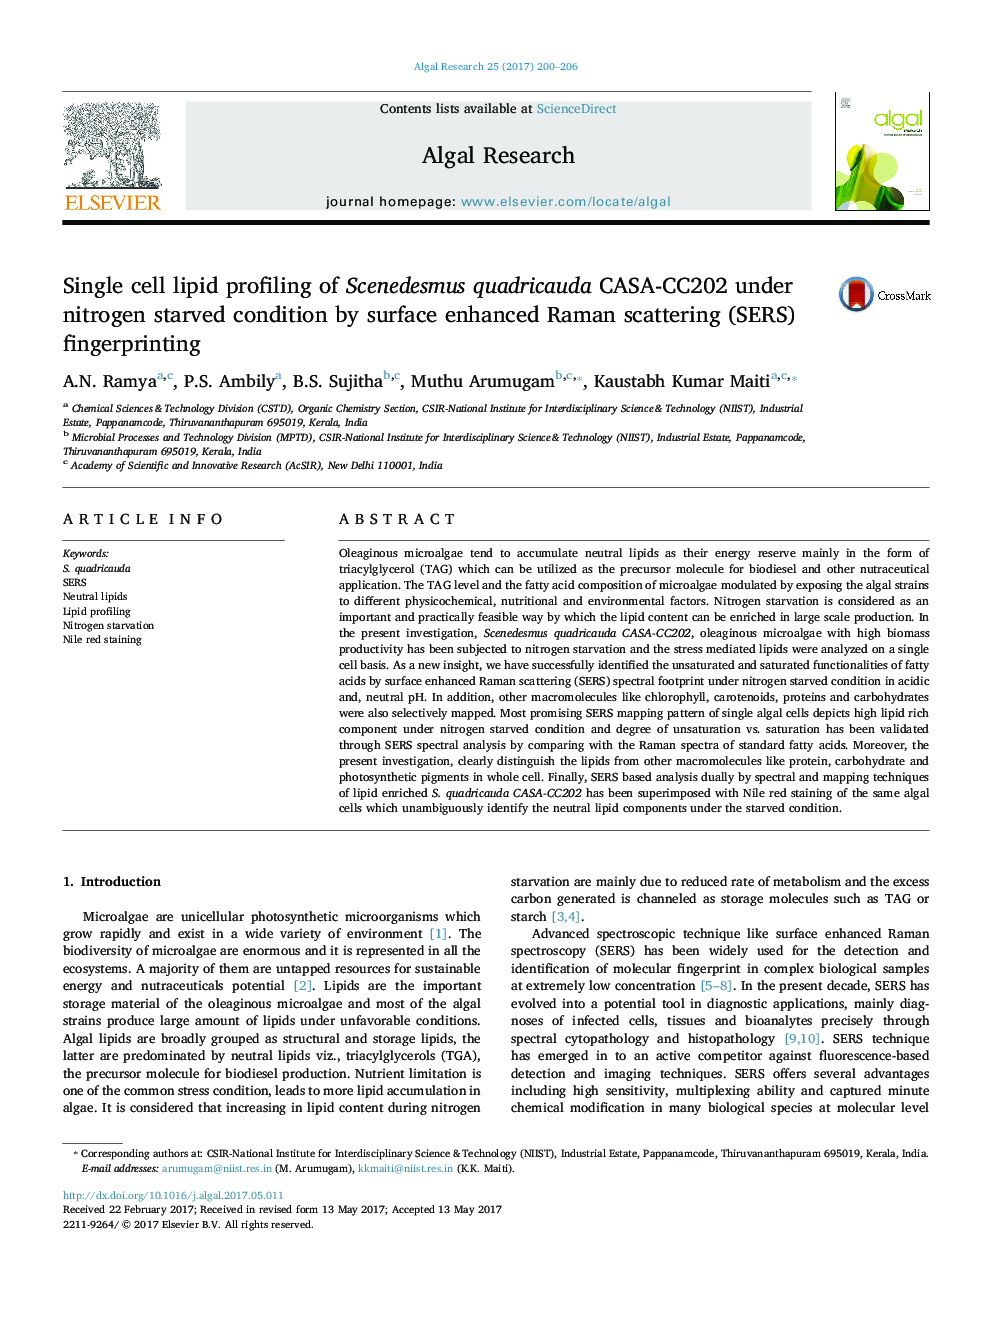 Single cell lipid profiling of Scenedesmus quadricauda CASA-CC202 under nitrogen starved condition by surface enhanced Raman scattering (SERS) fingerprinting